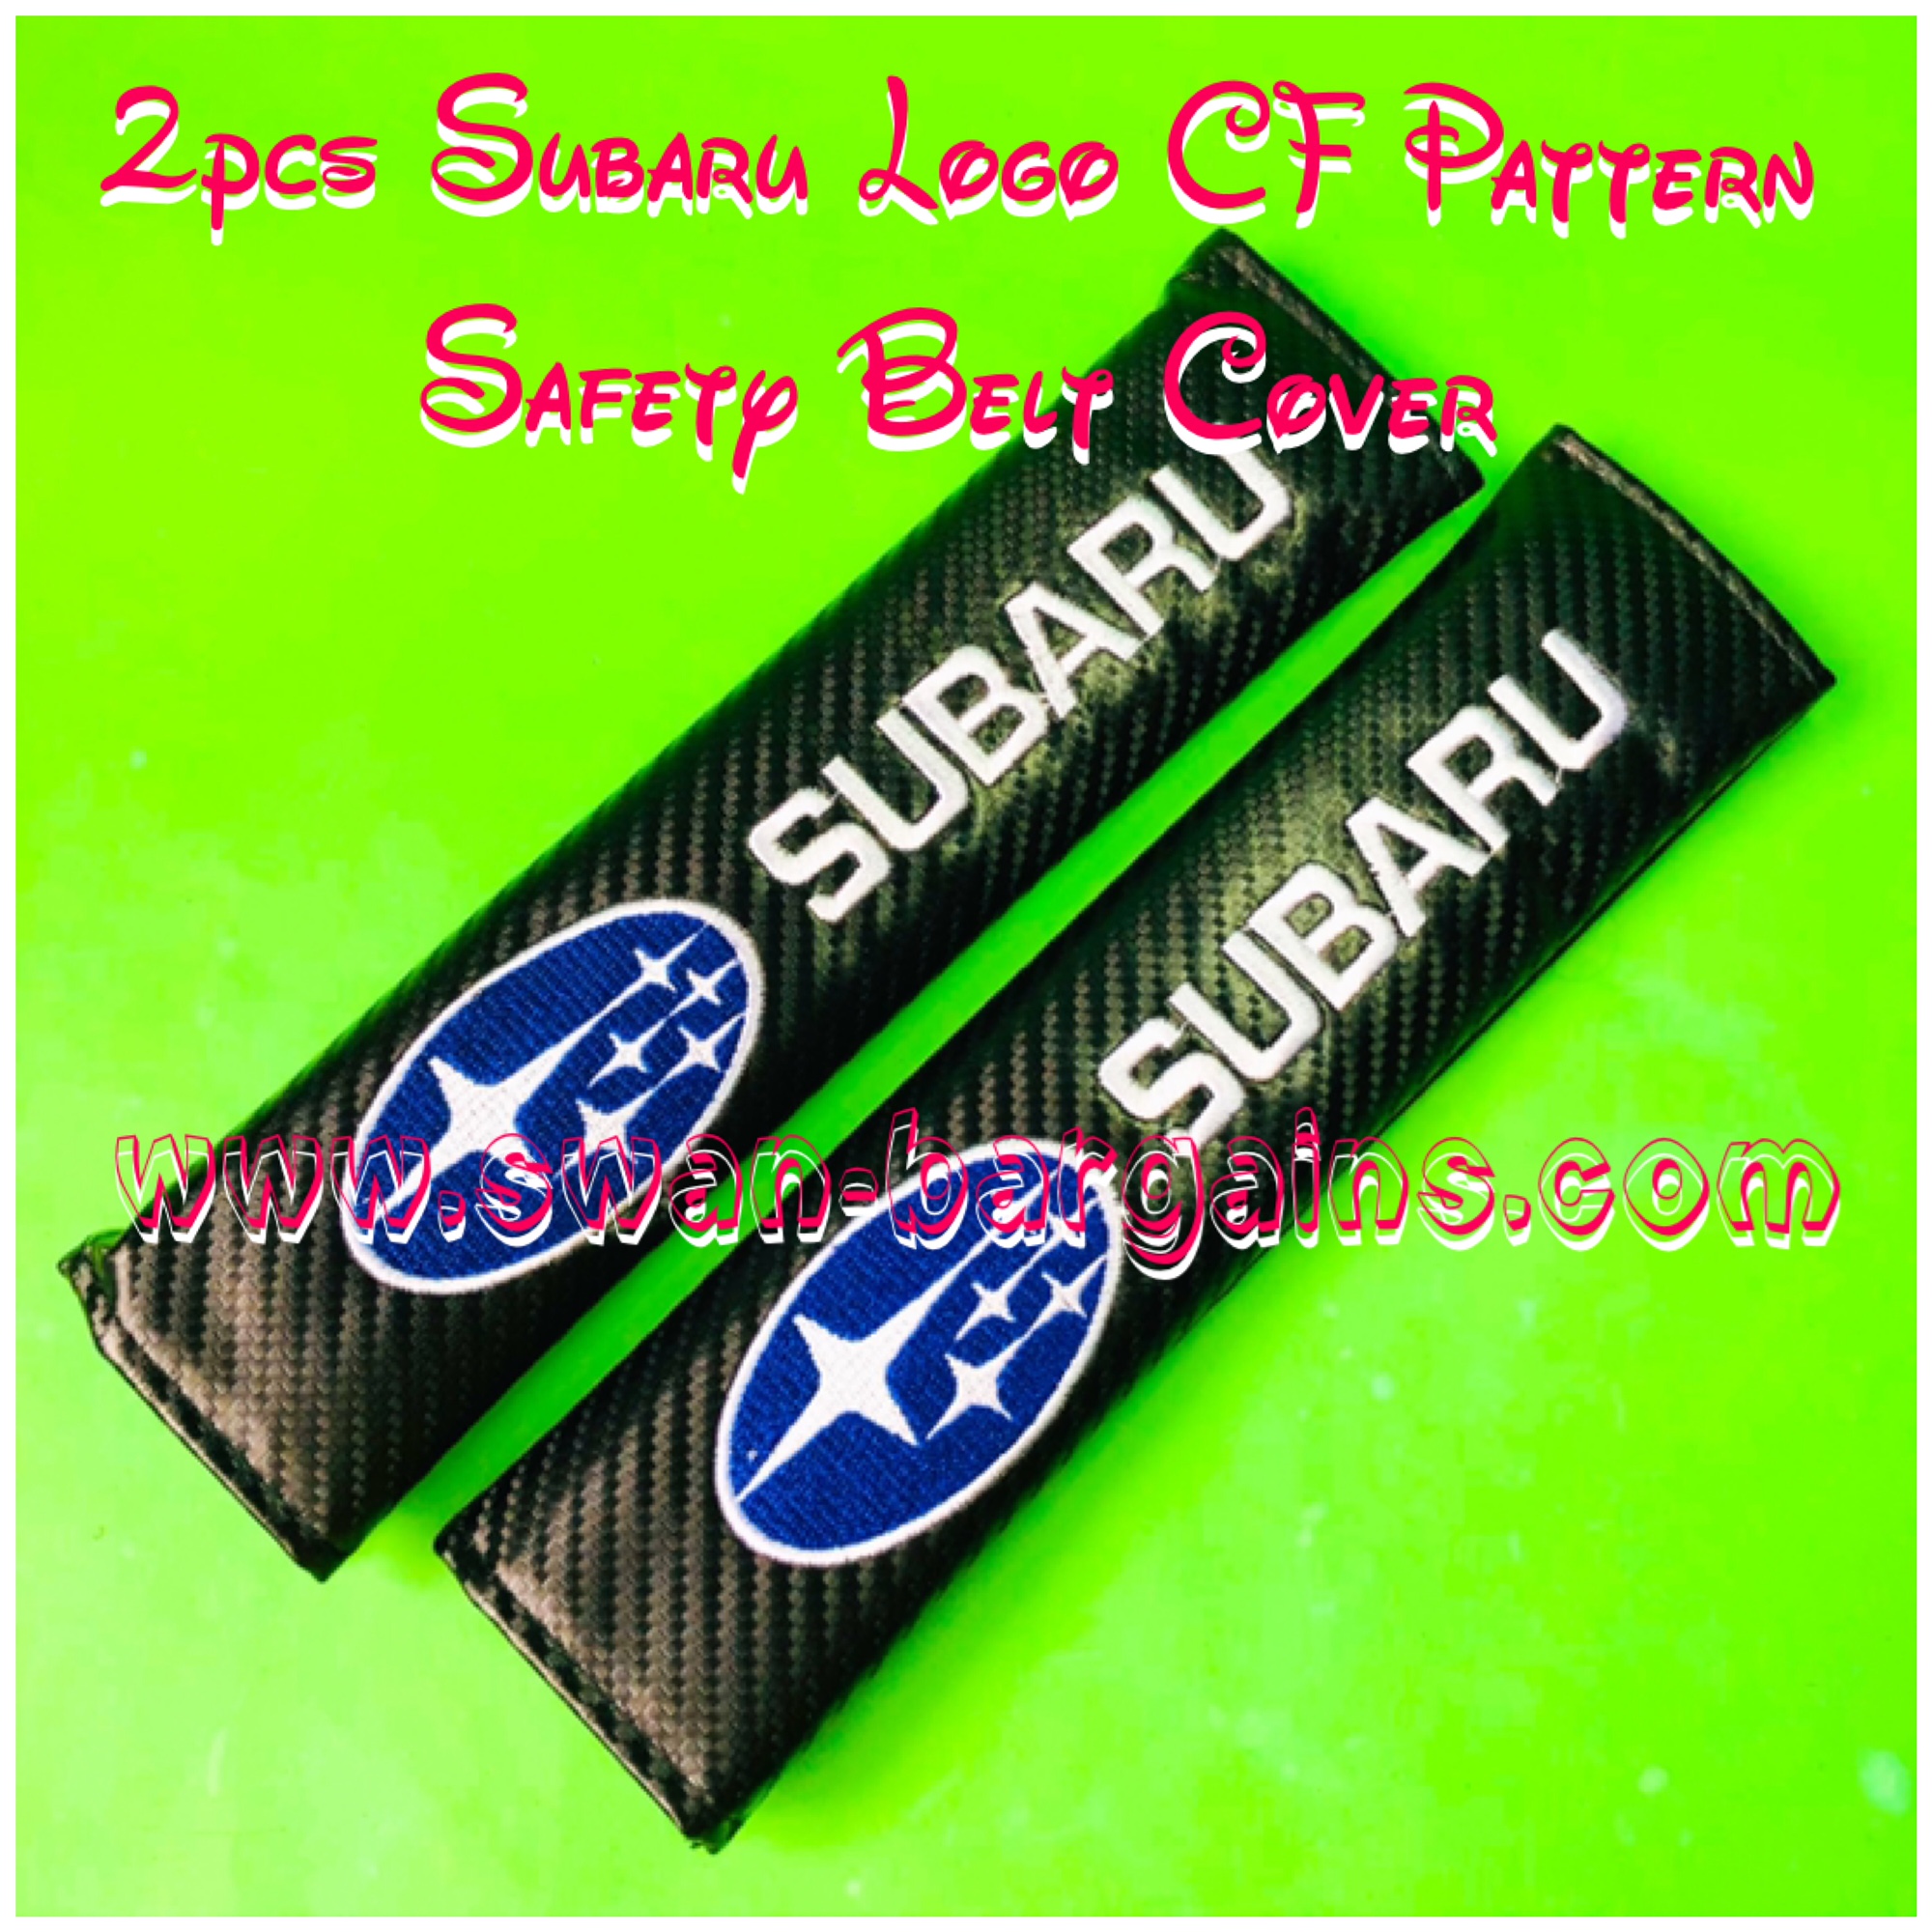 Subaru Car Safety Belt Cover Set Singapore